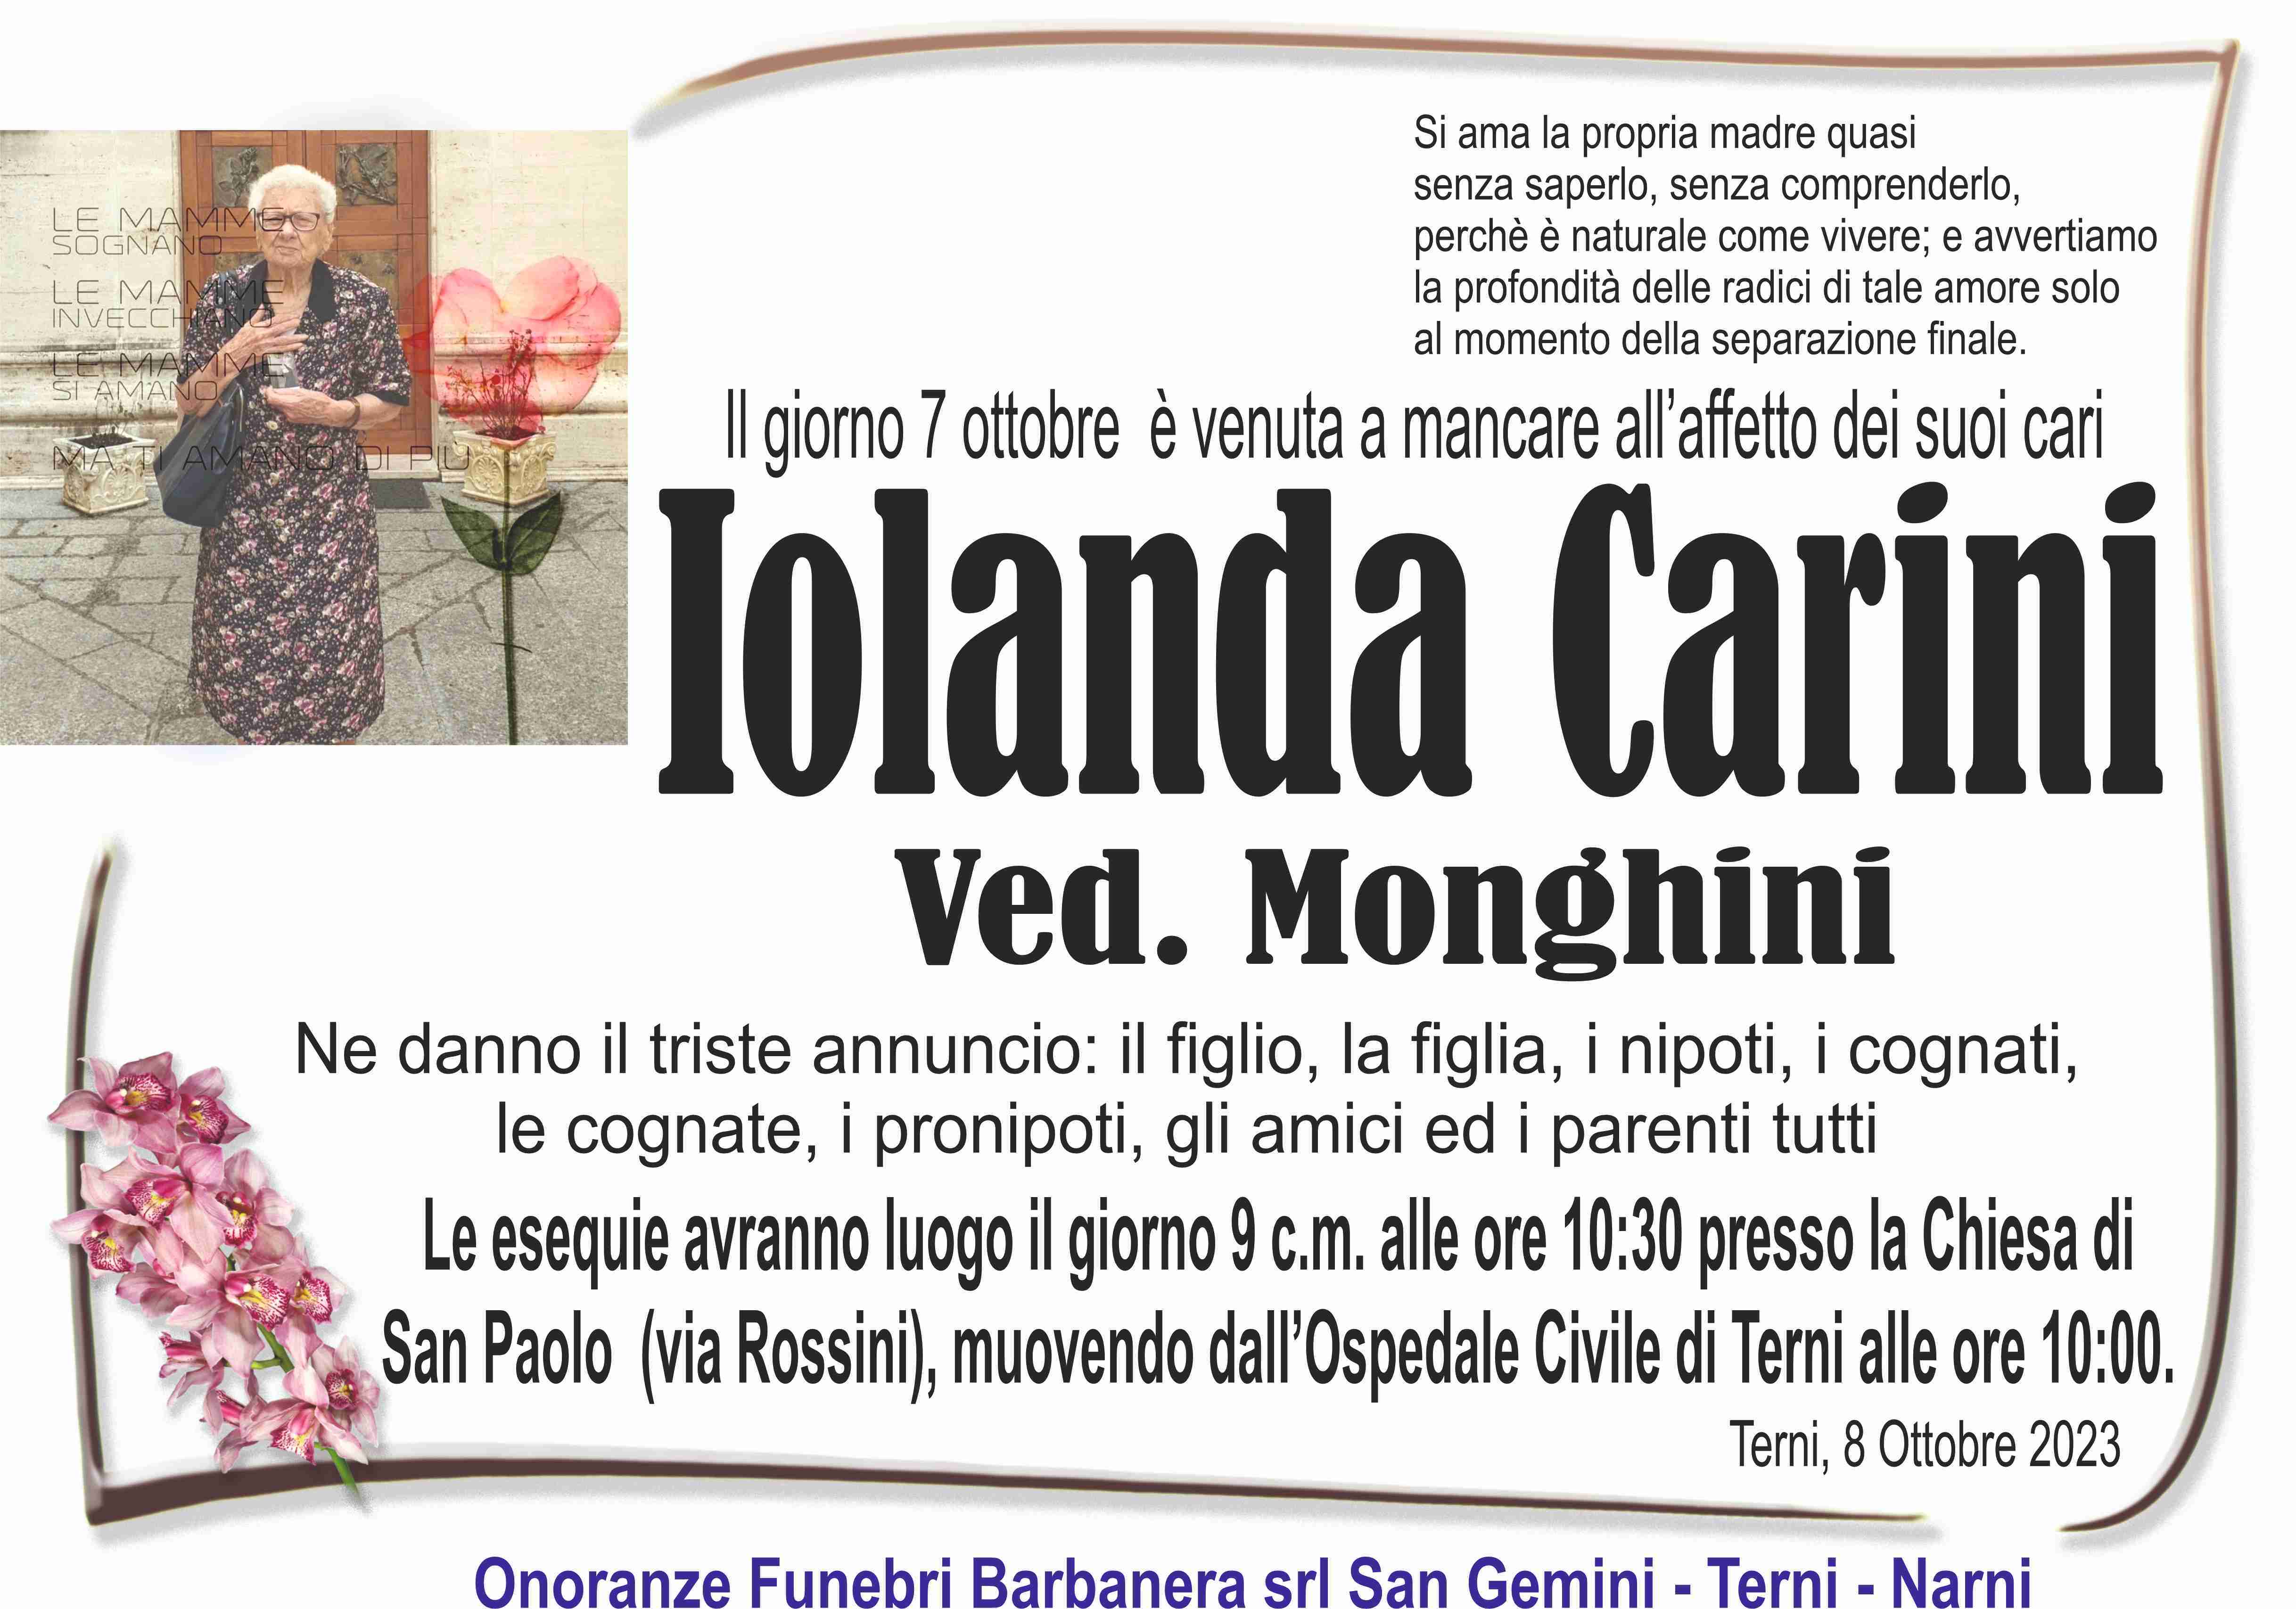 Iolanda Carini